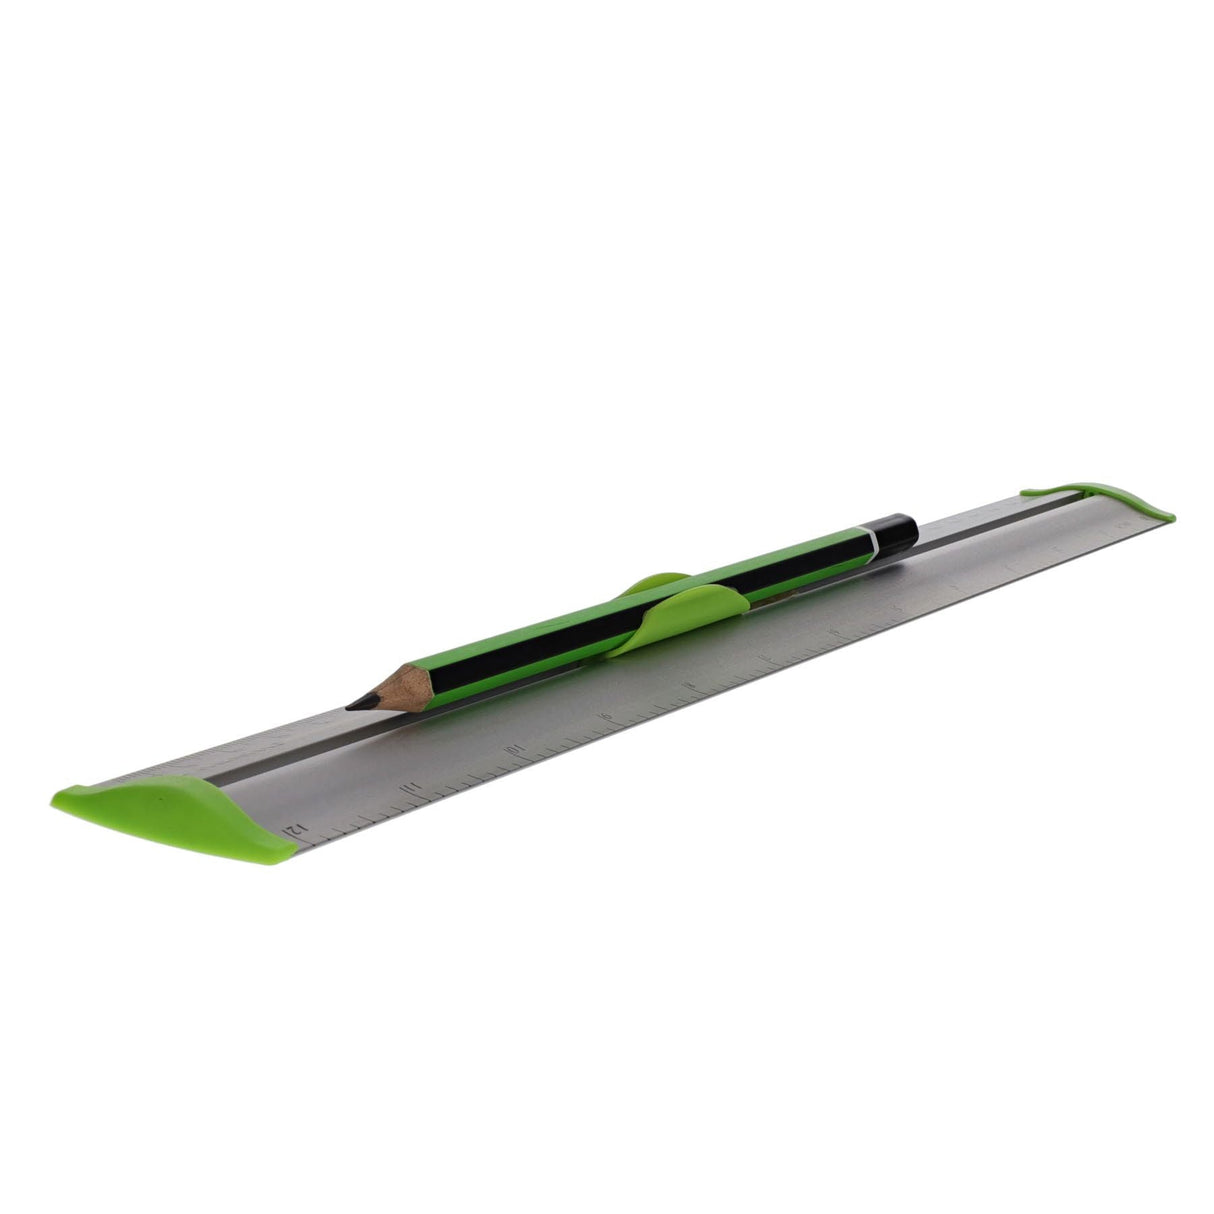 Premto S1 Aluminum Ruler With Grip 30cm - Caterpillar Green-Rulers-Premto|StationeryShop.co.uk